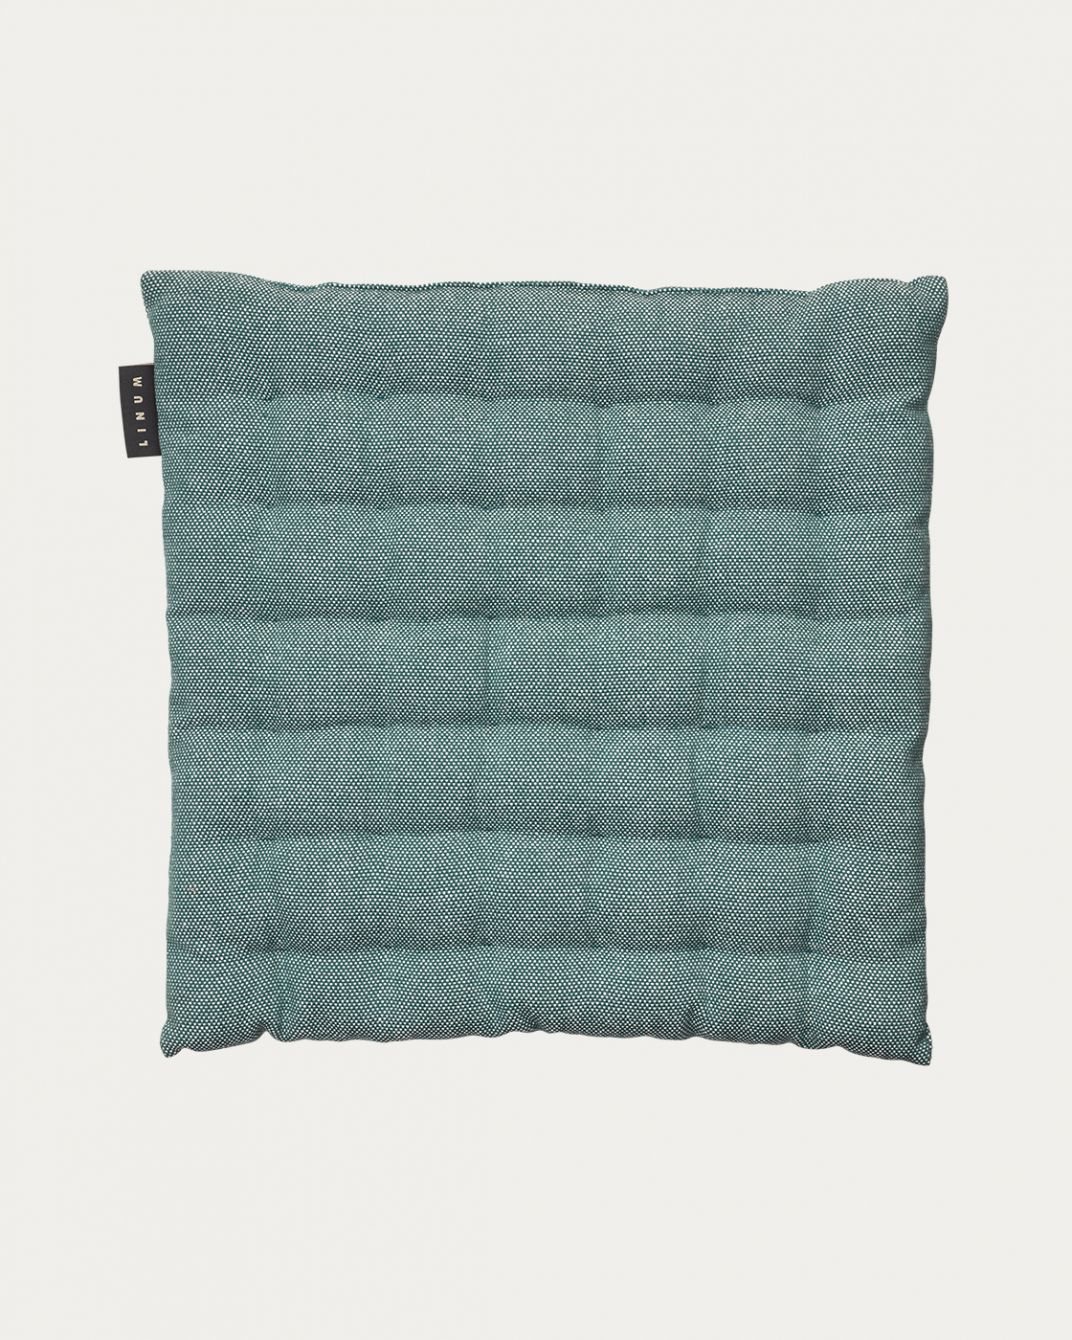 PEPPER Seat cushion 40x40 cm Dark grey turquoise